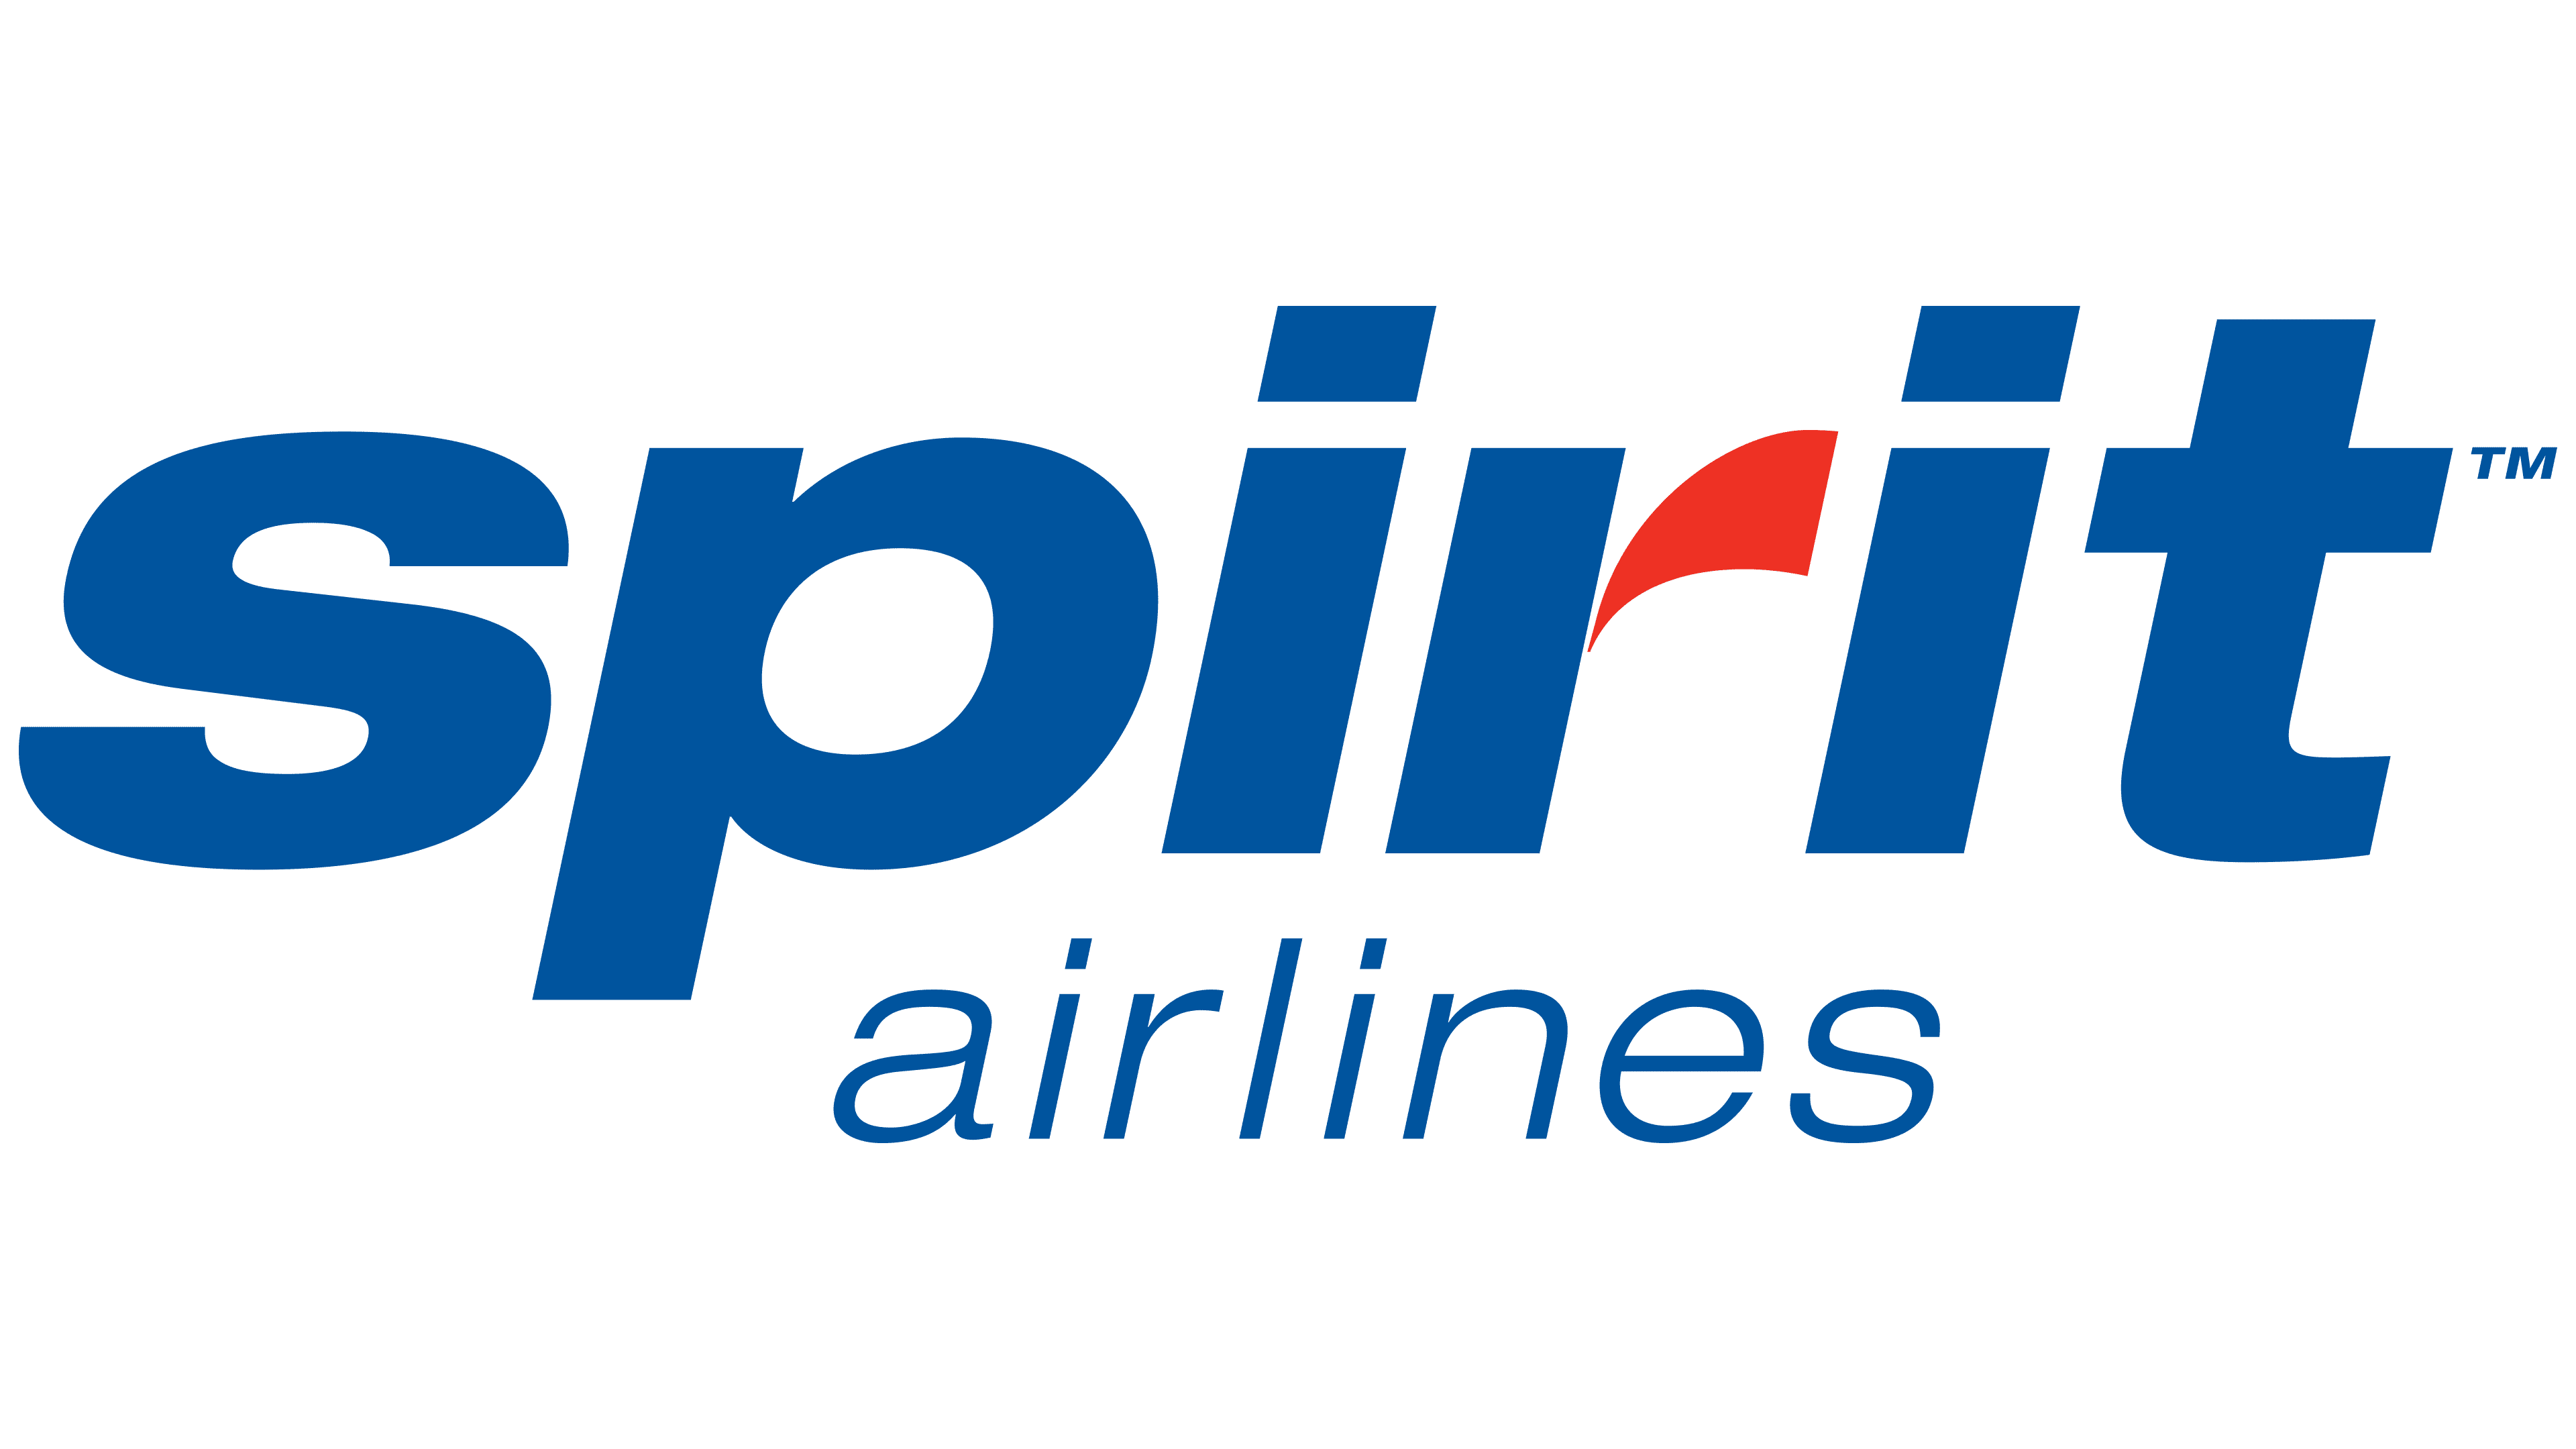 spirit airlines logo